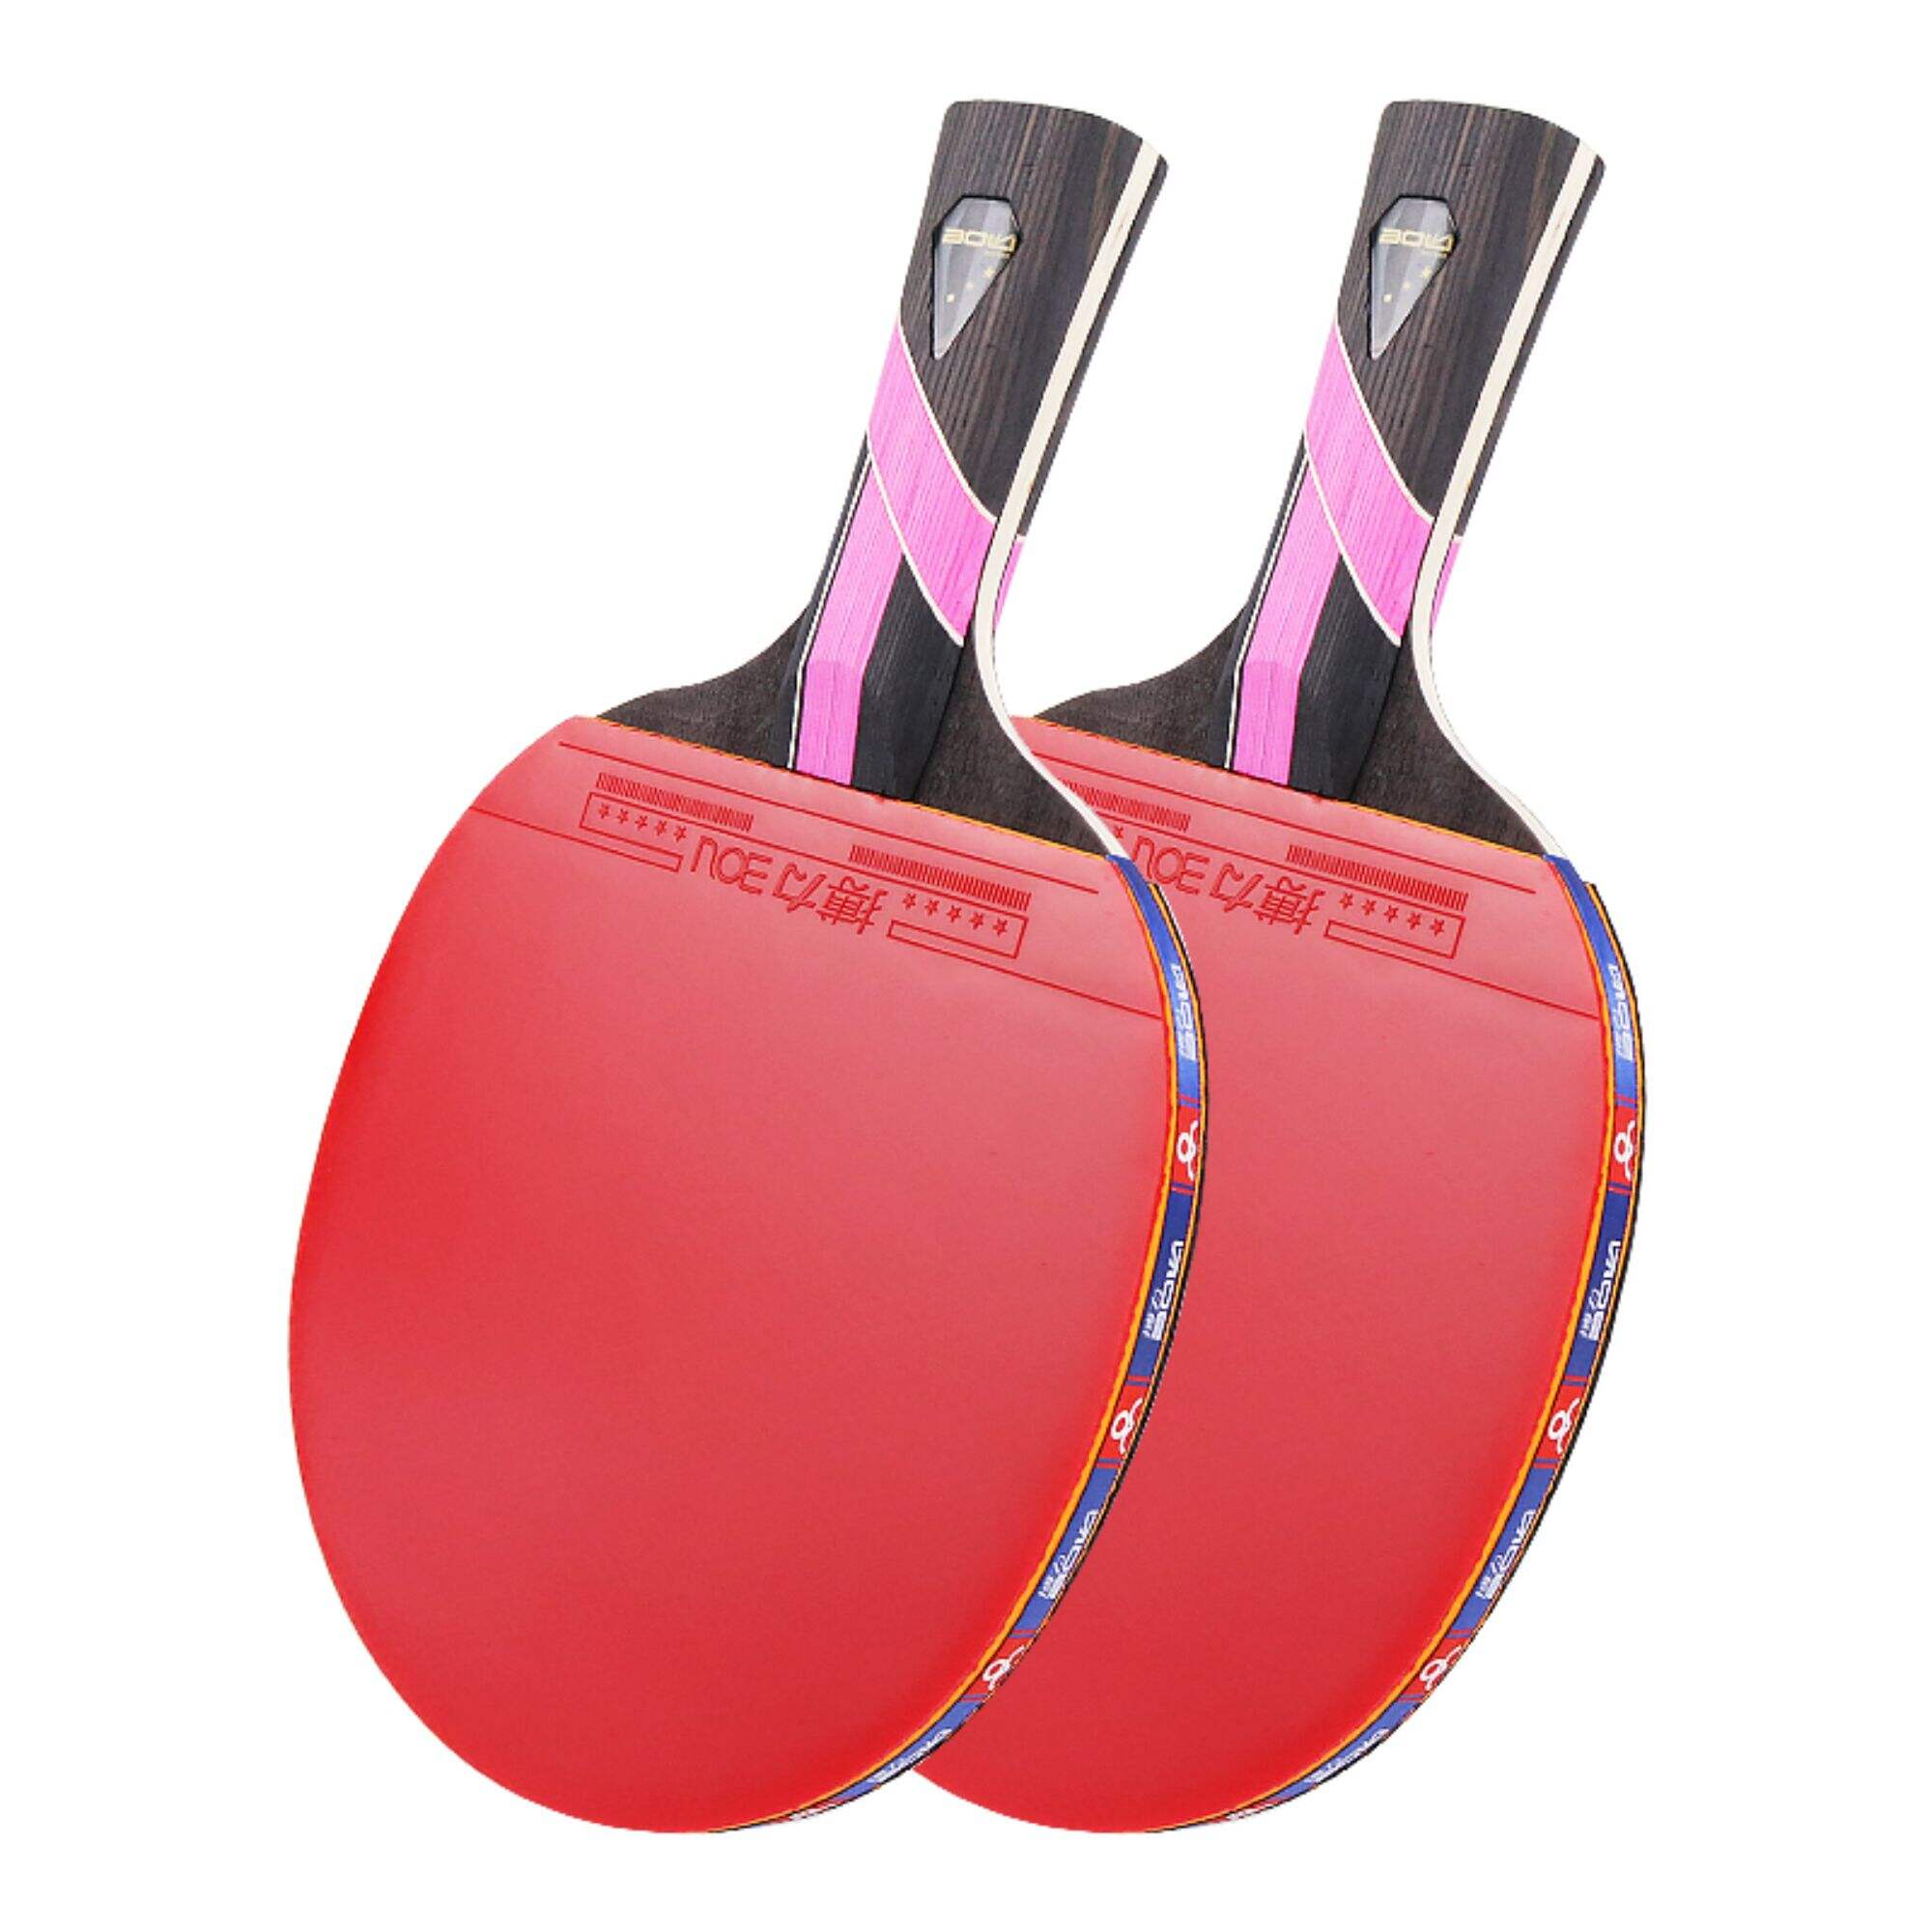 Boli 3star Professional Table Tennis Rakcet/Bat/Paddle